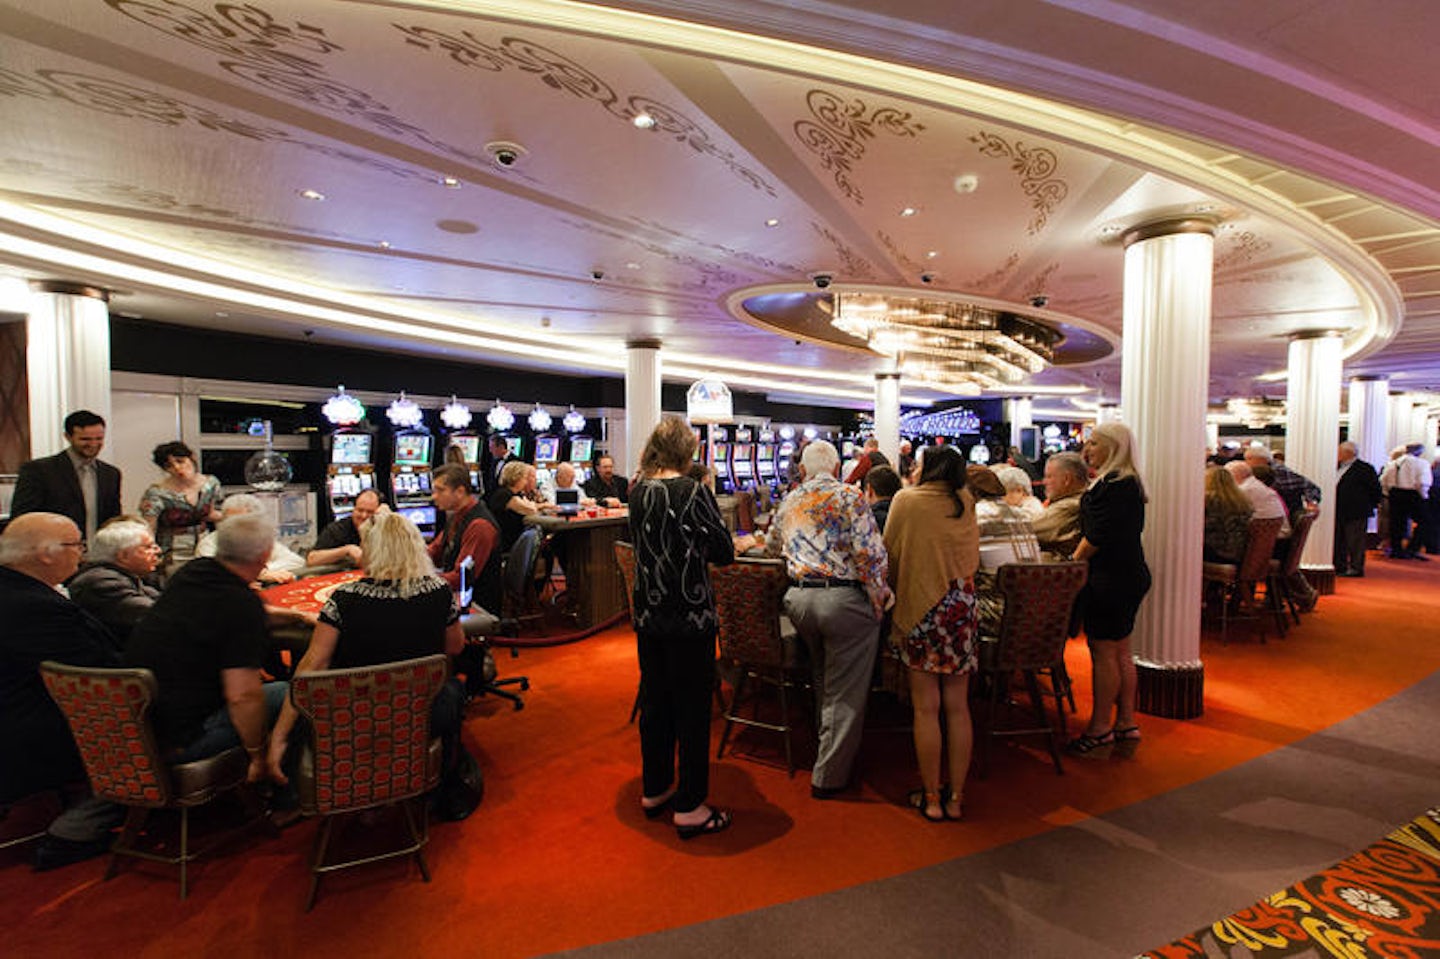 Fortunes Casino on Celebrity Silhouette